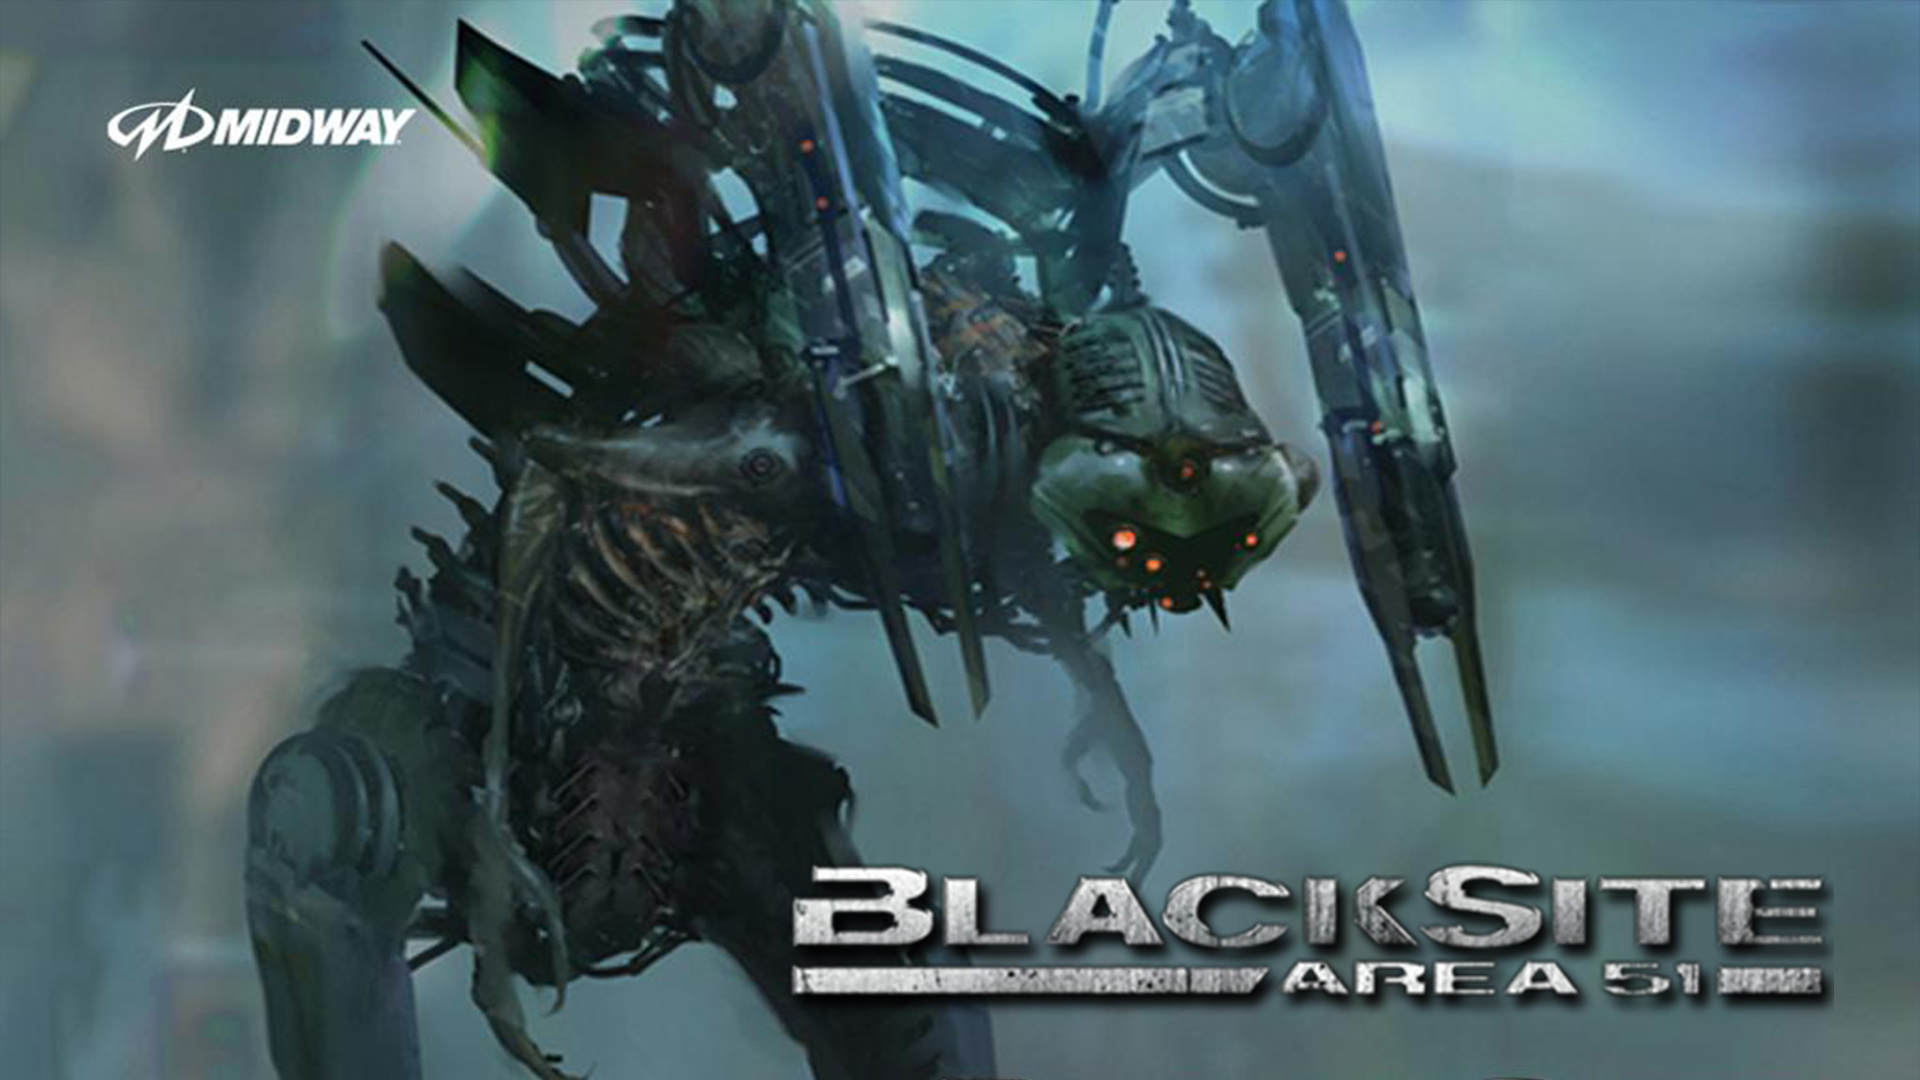 Video Game BlackSite: Area 51 Wallpaper